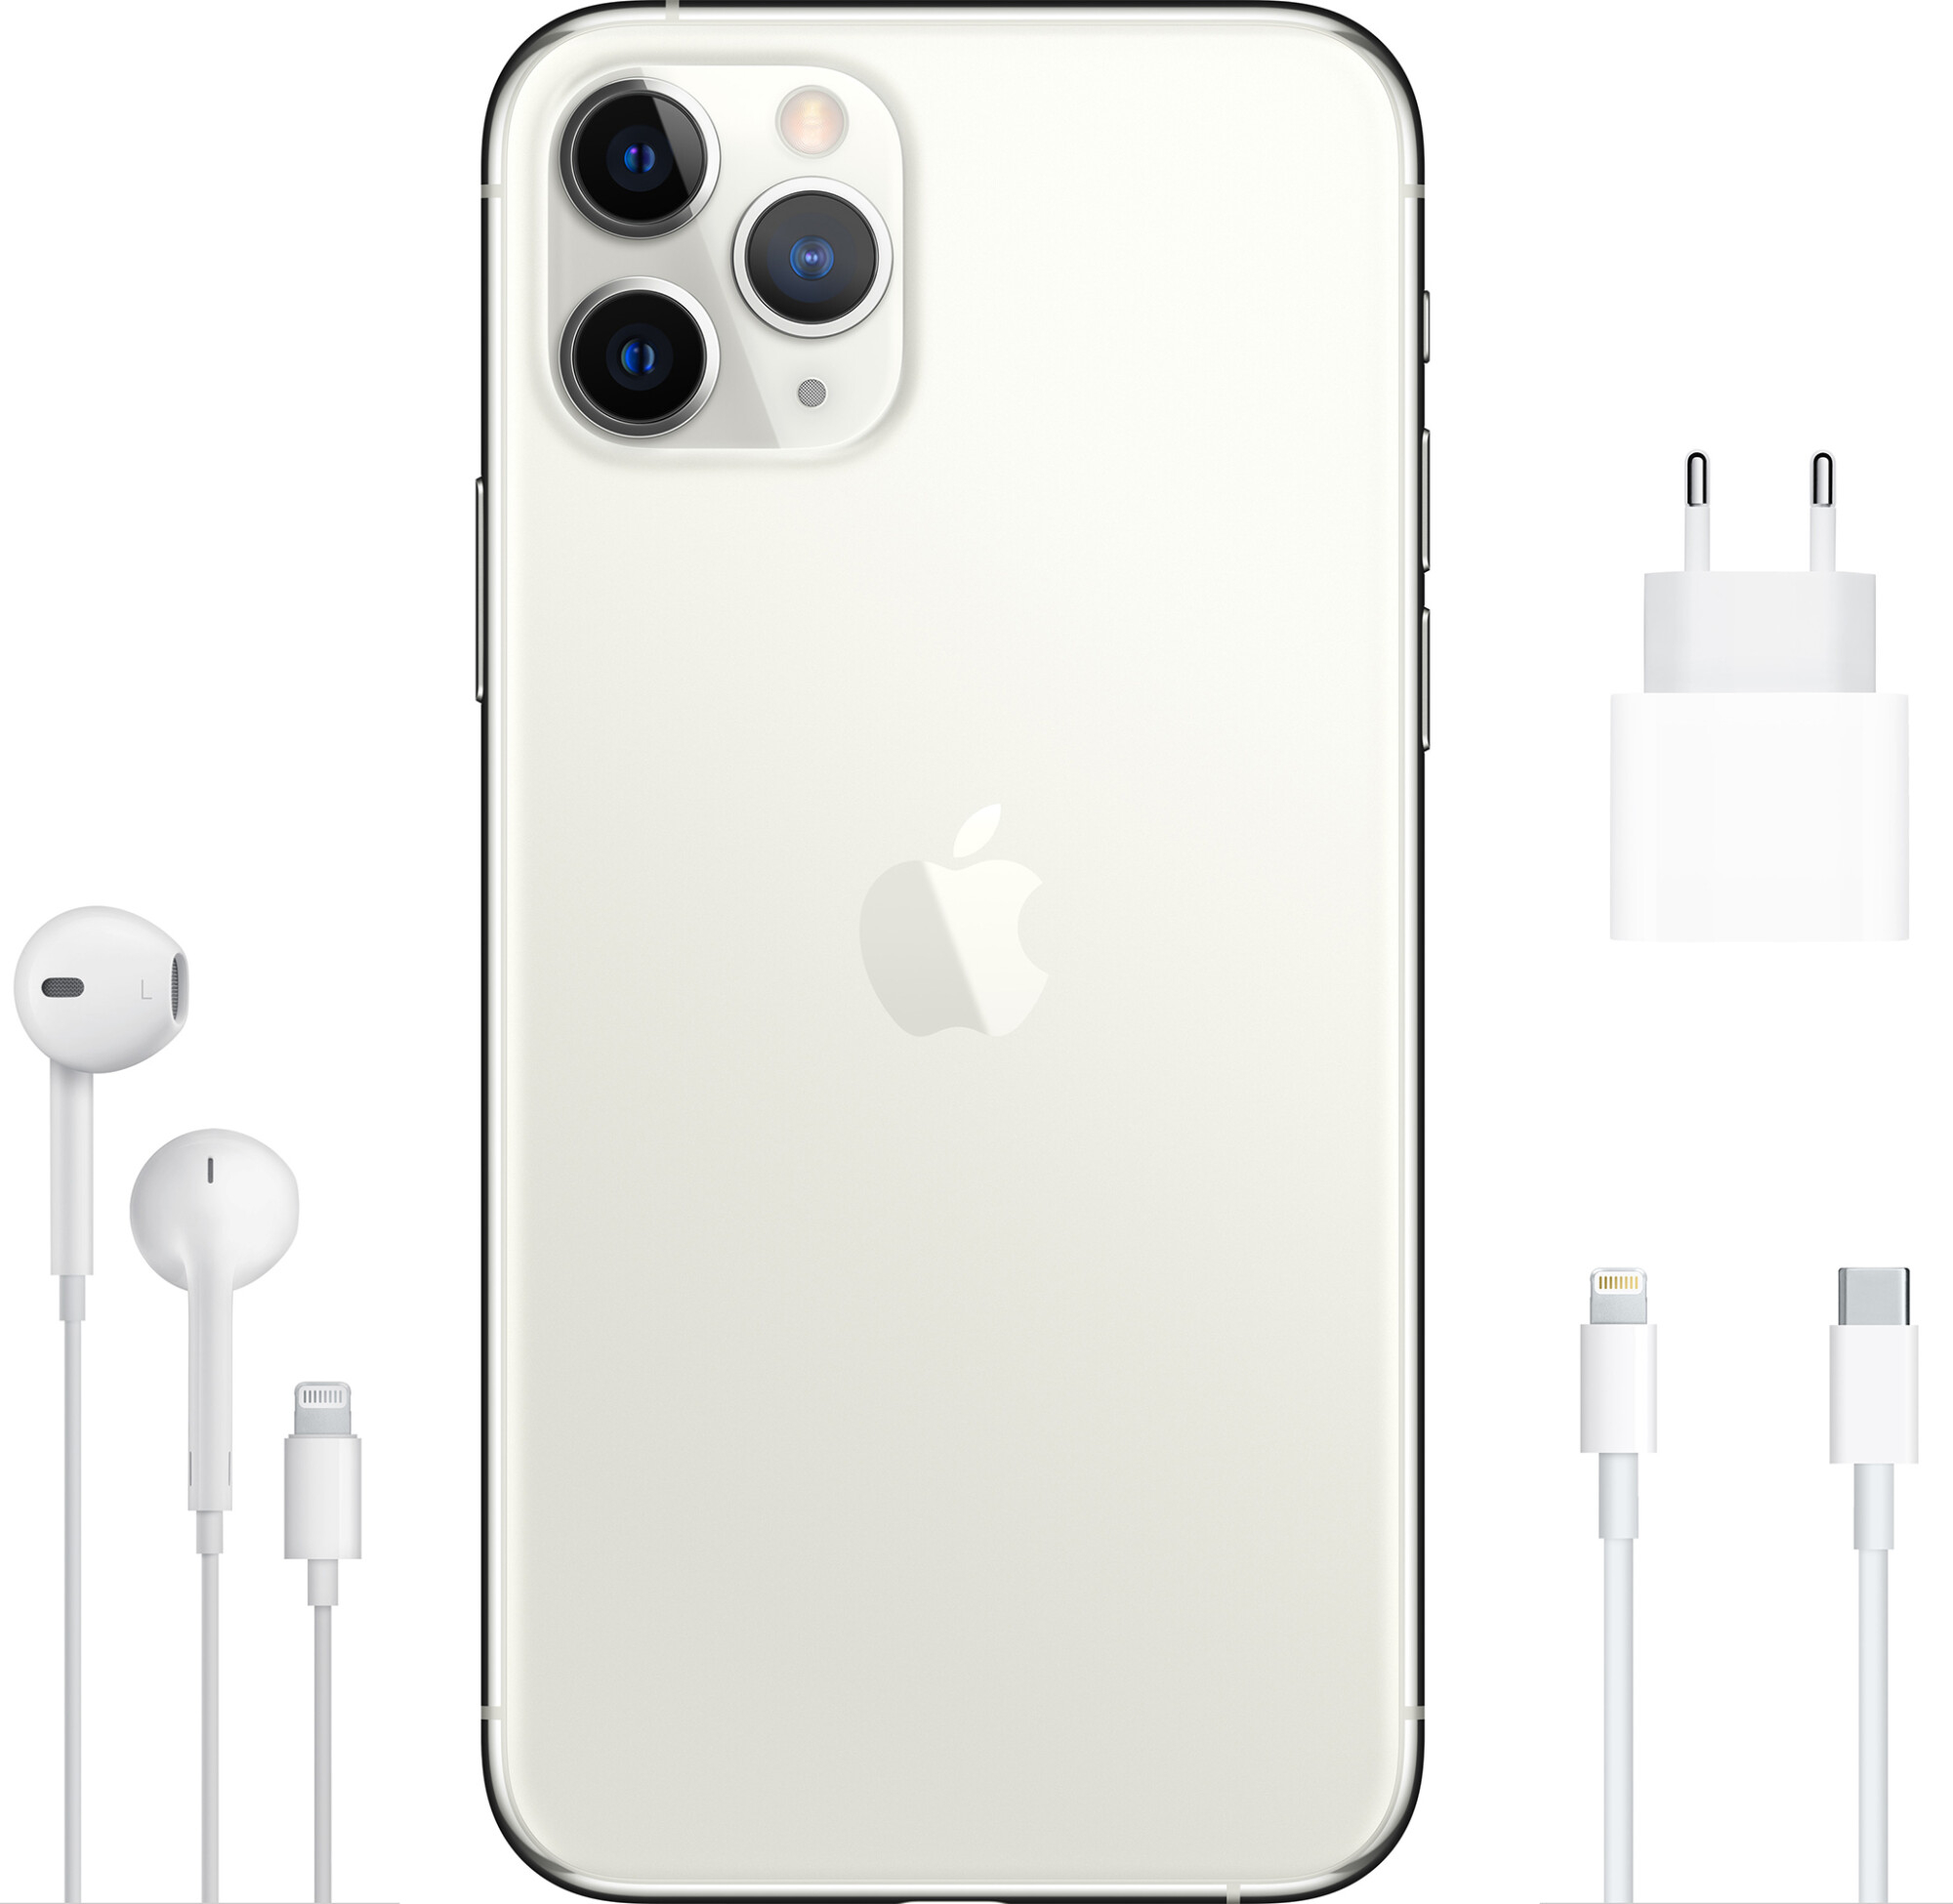  Apple iPhone 11 Pro 64GB Silver (MWC32)